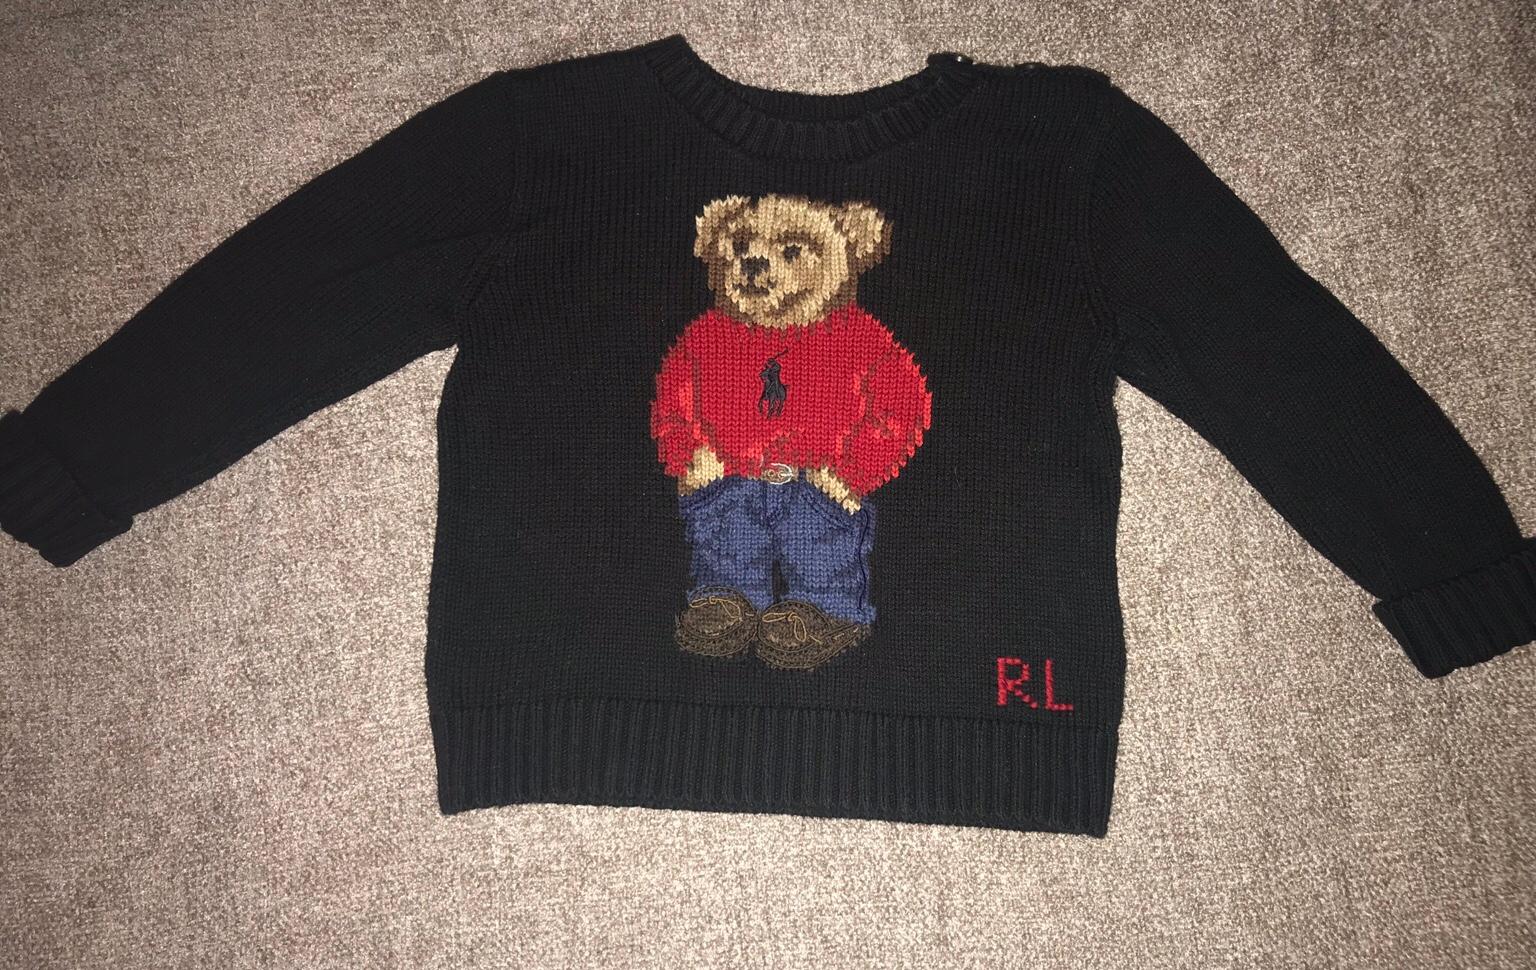 ralph lauren baby boy teddy bear sweater